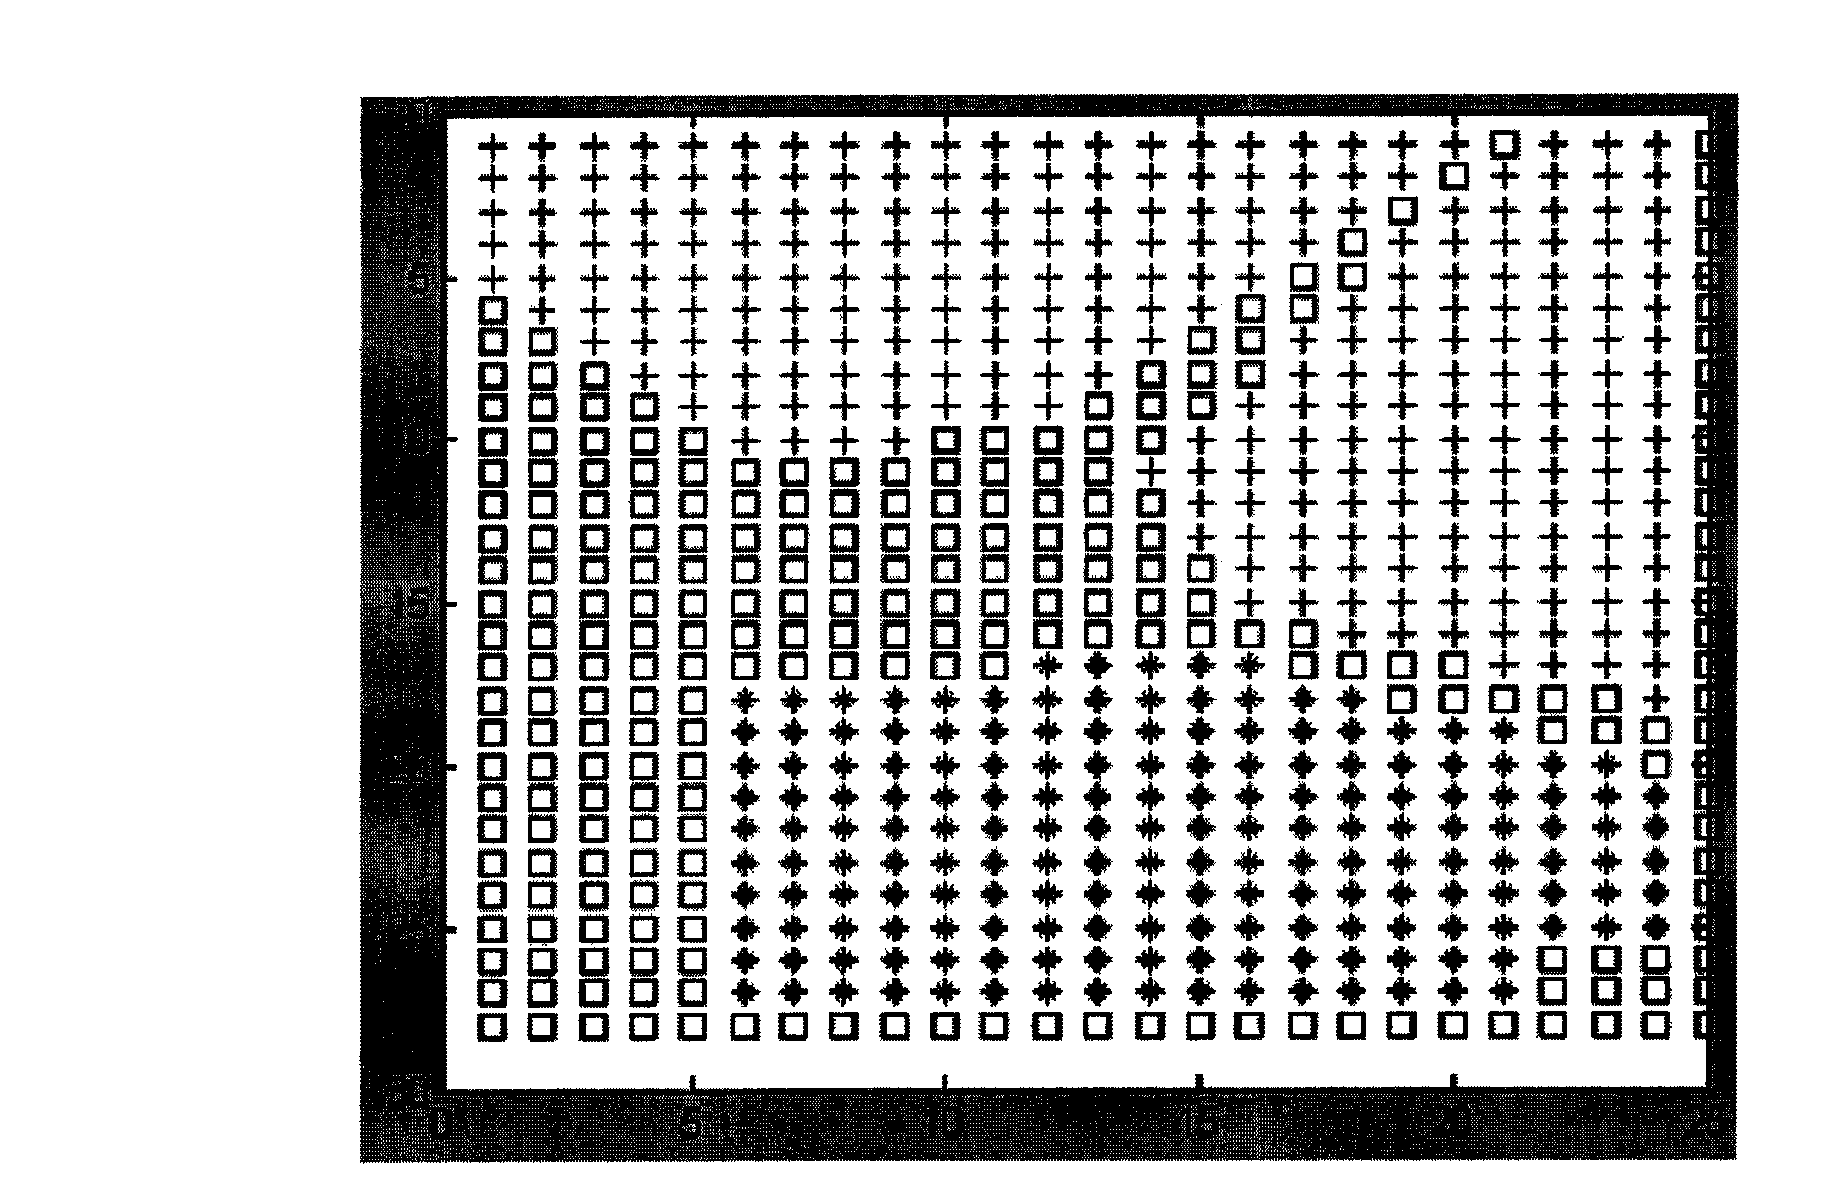 High-spectrum image segmentation method based on pixel space information